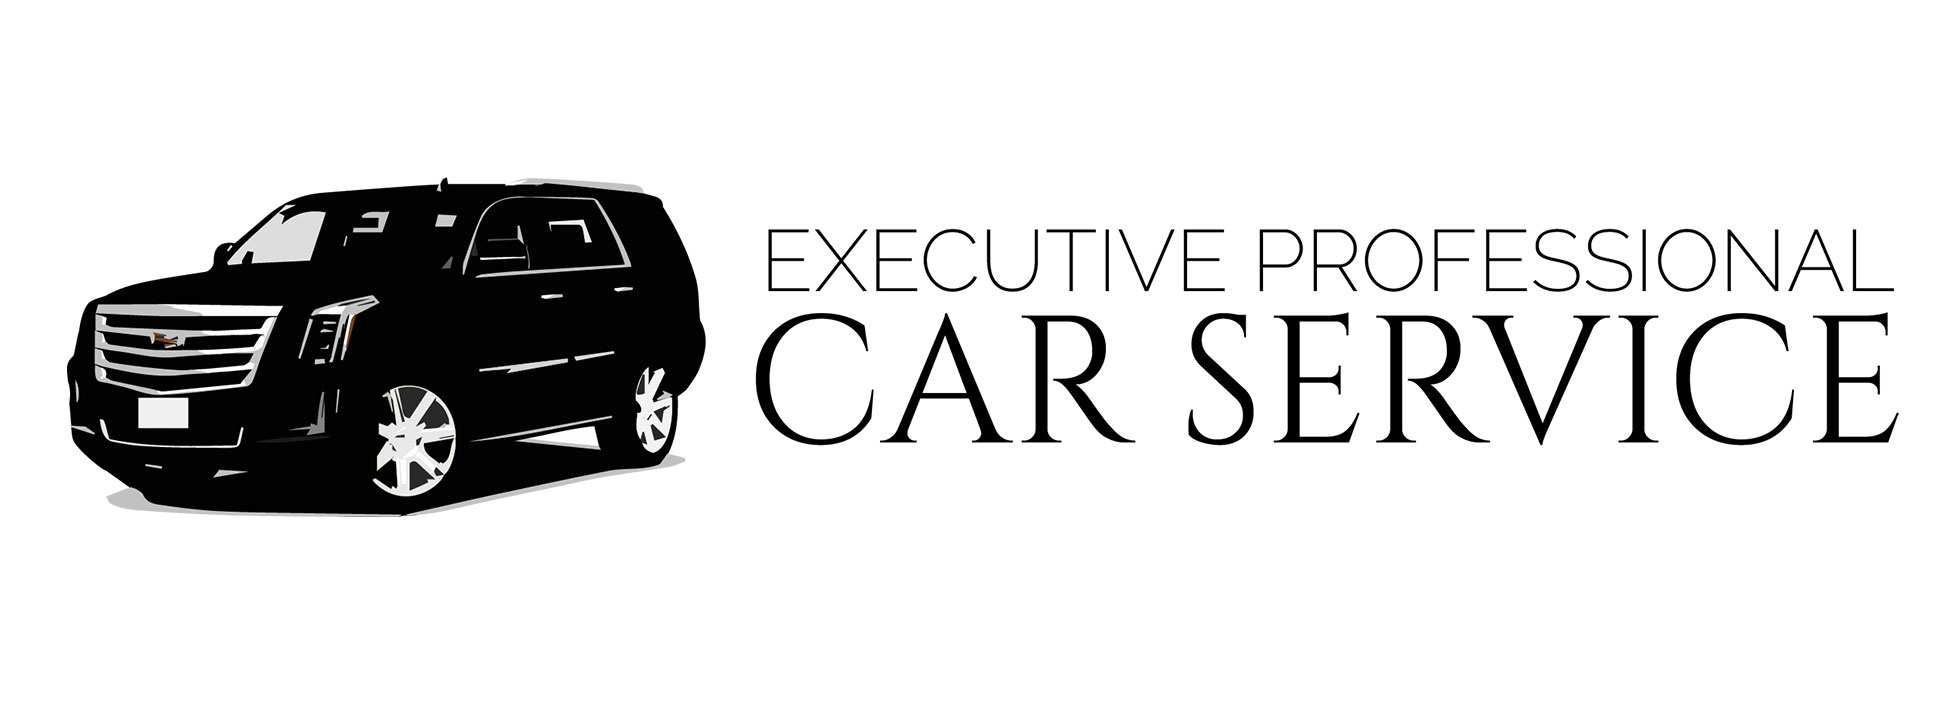 executive professional car service